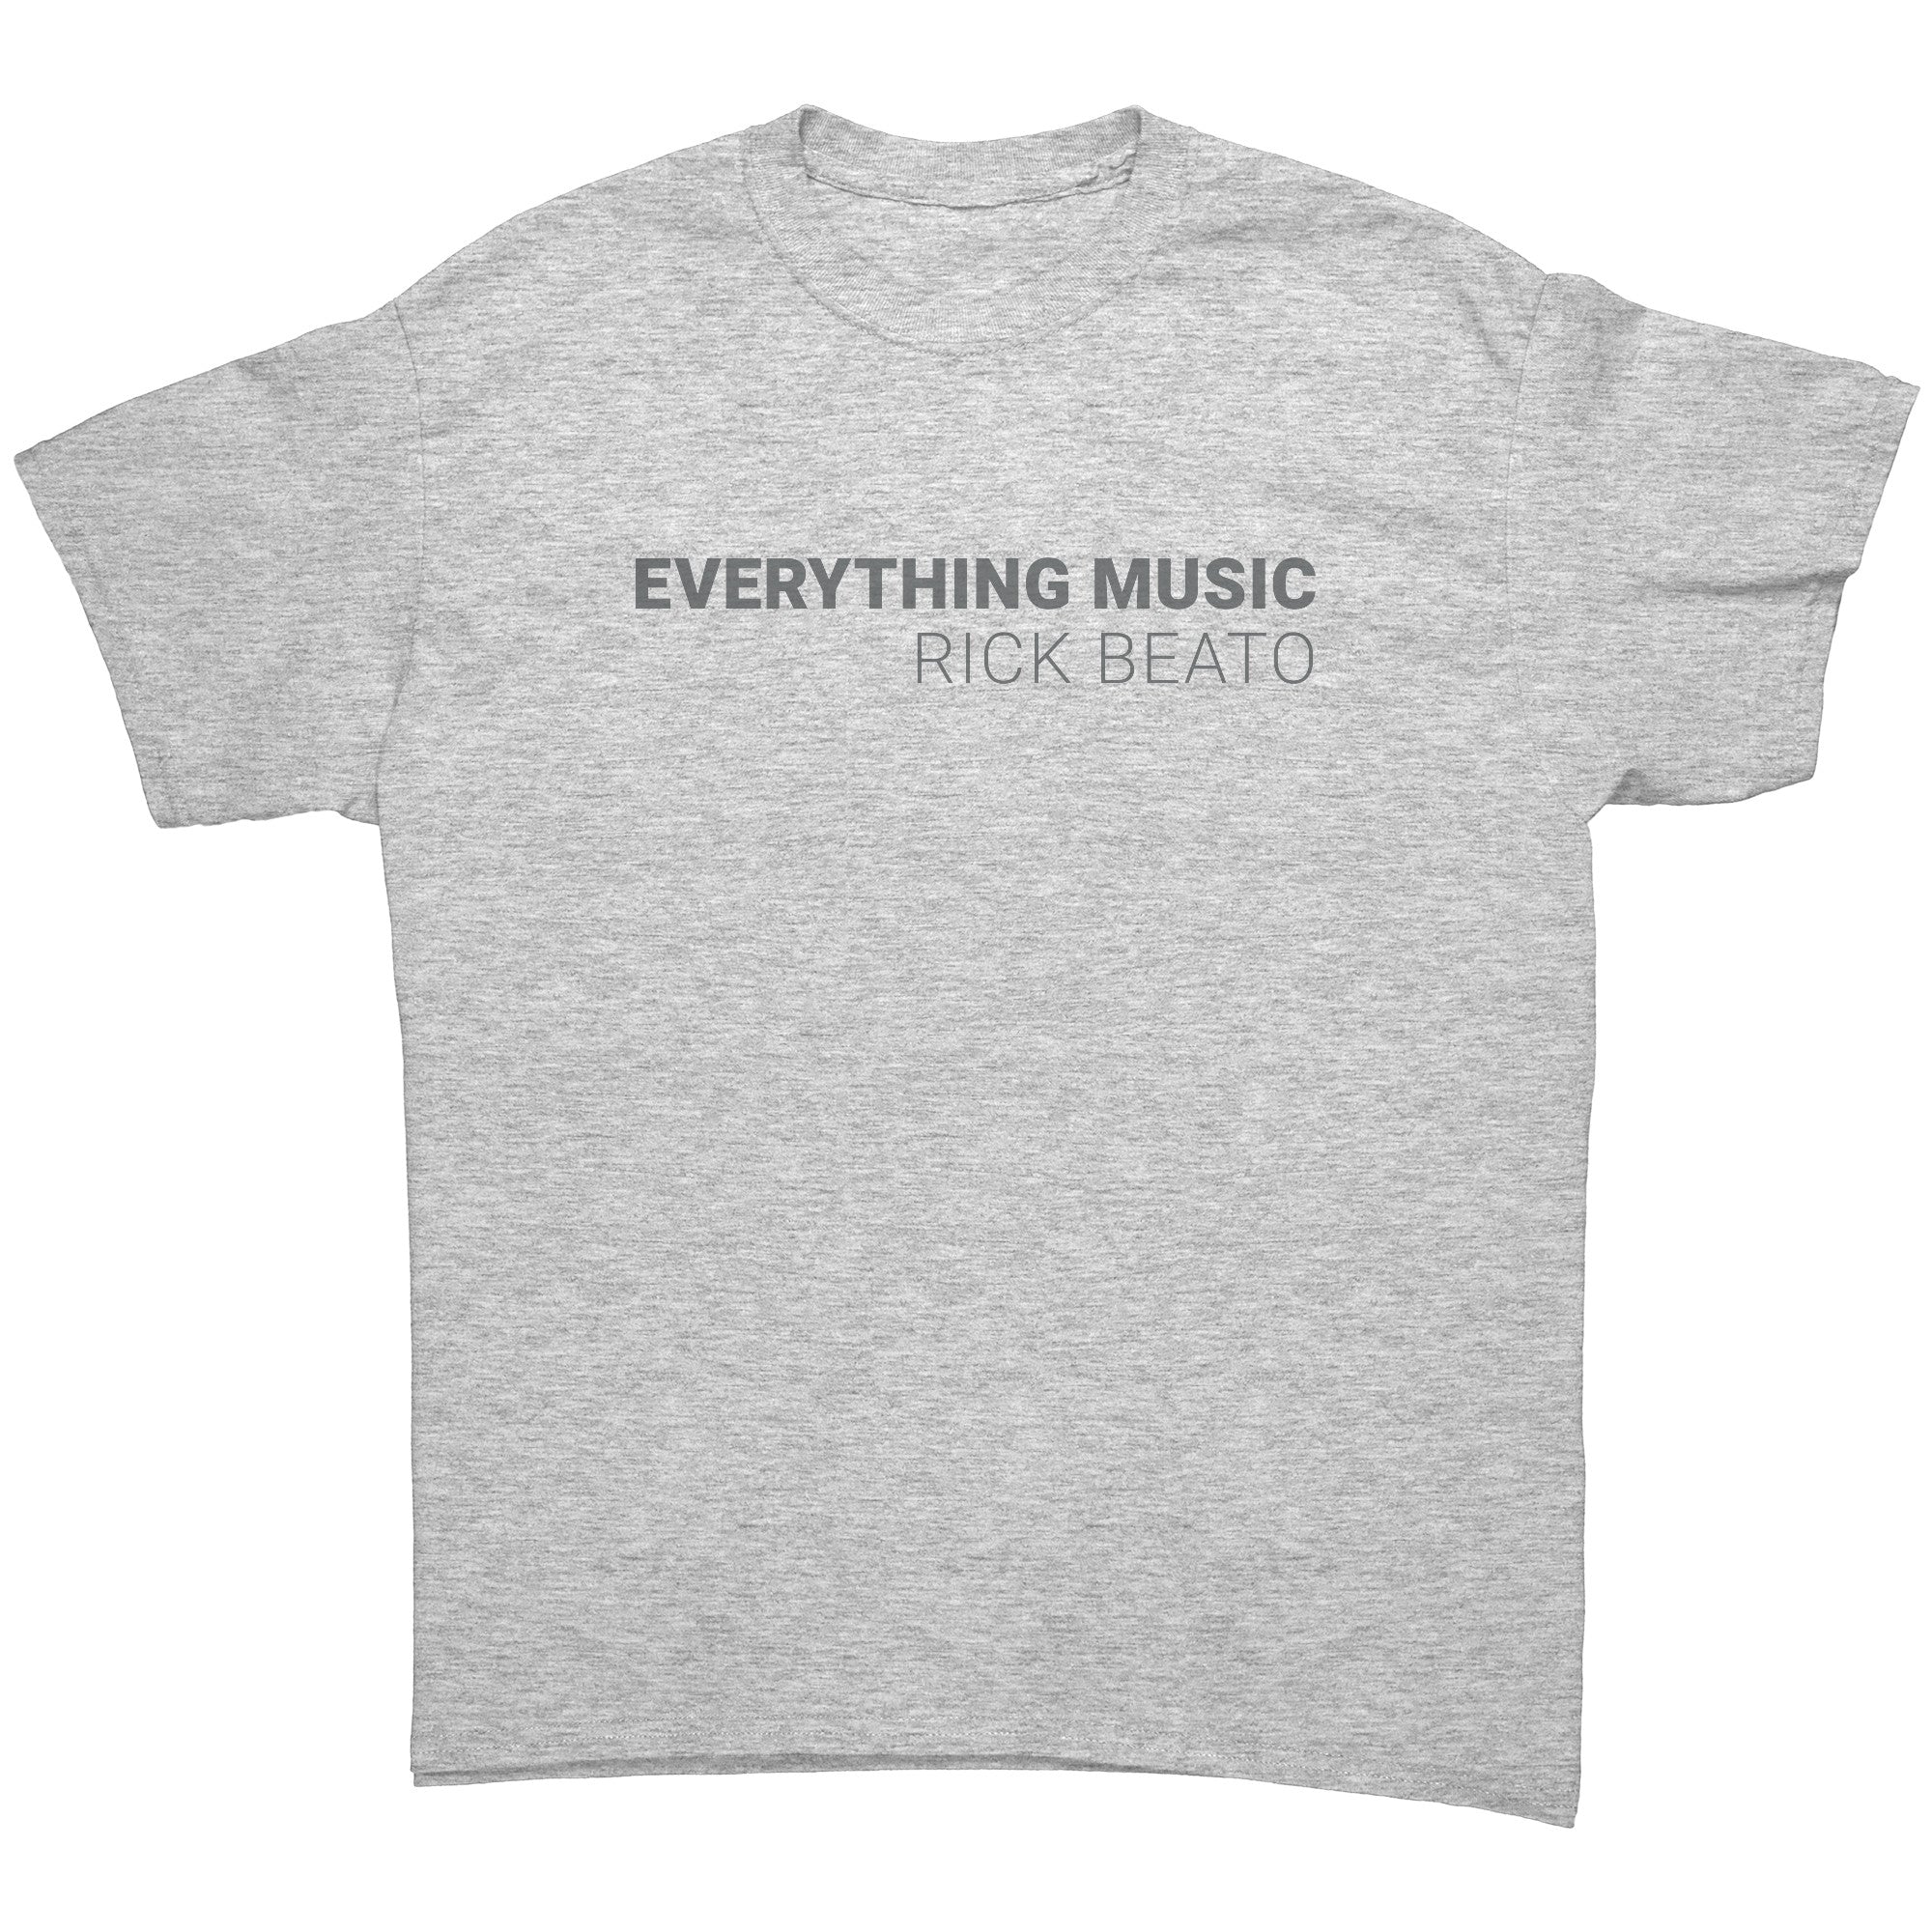 Light Grey "Rick Beato - Everything Music" T-Shirt